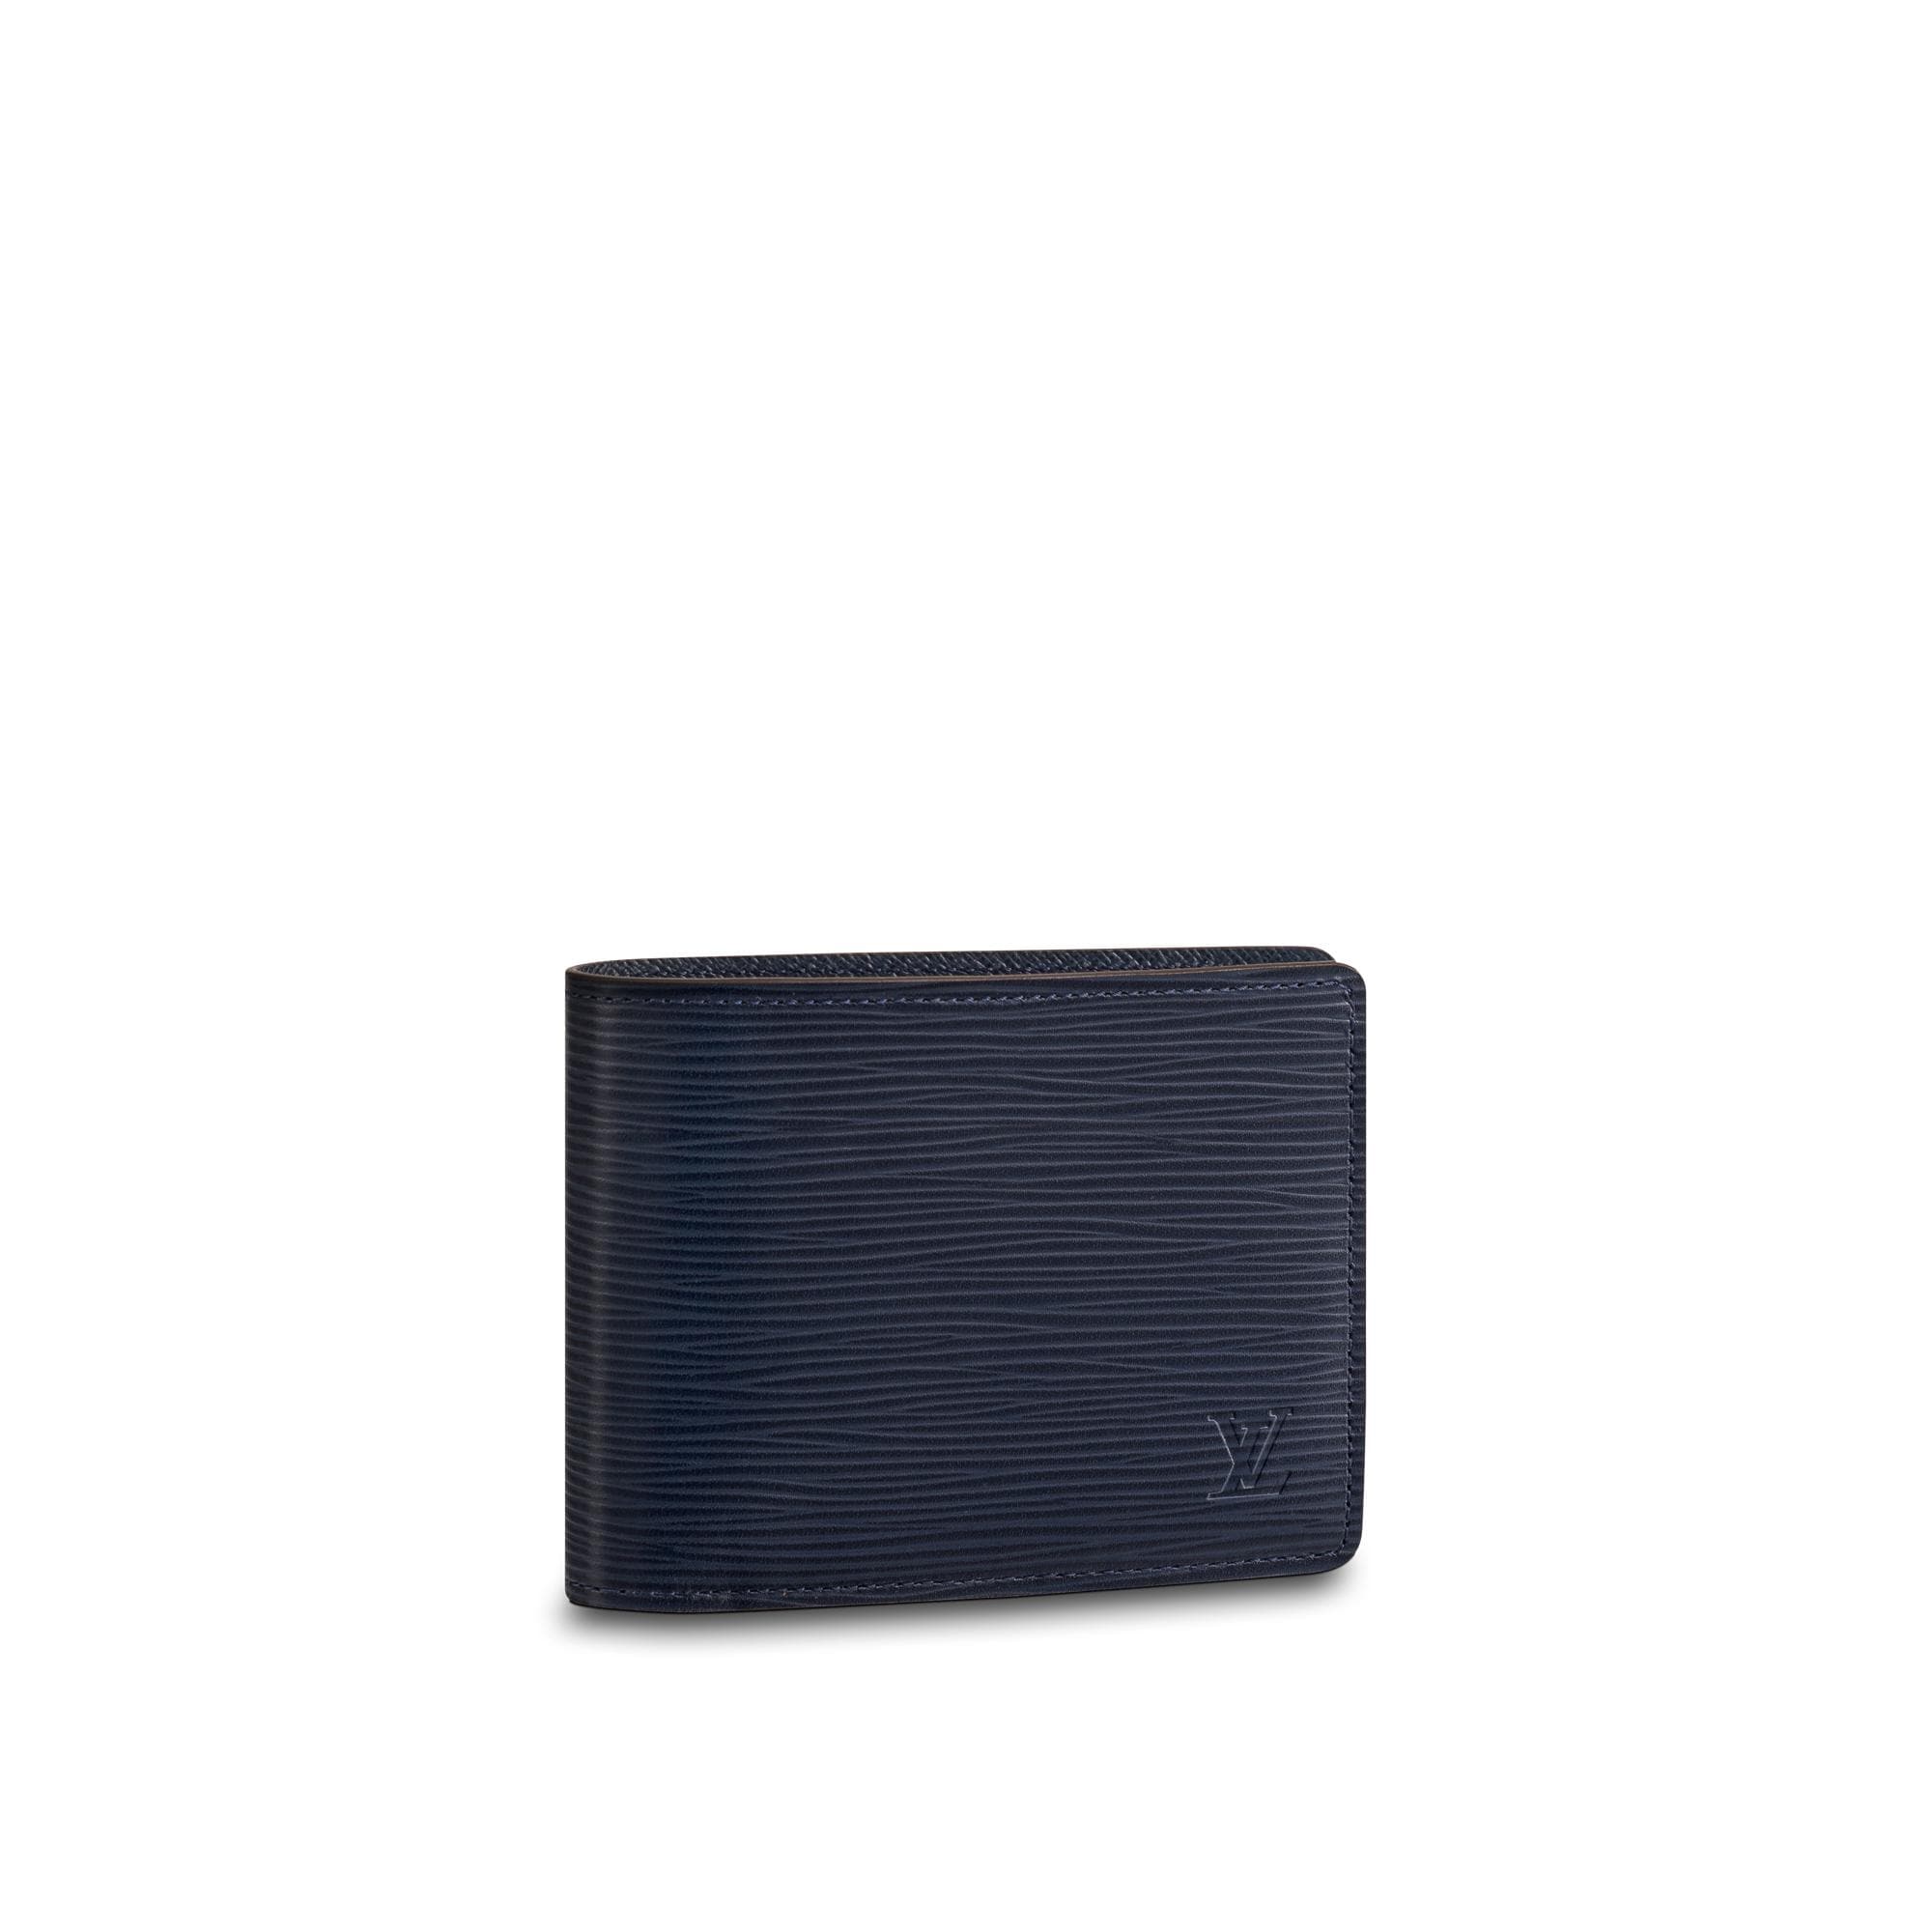 Louis Vuitton Designer Wallet for Men in Epi Leather M61825